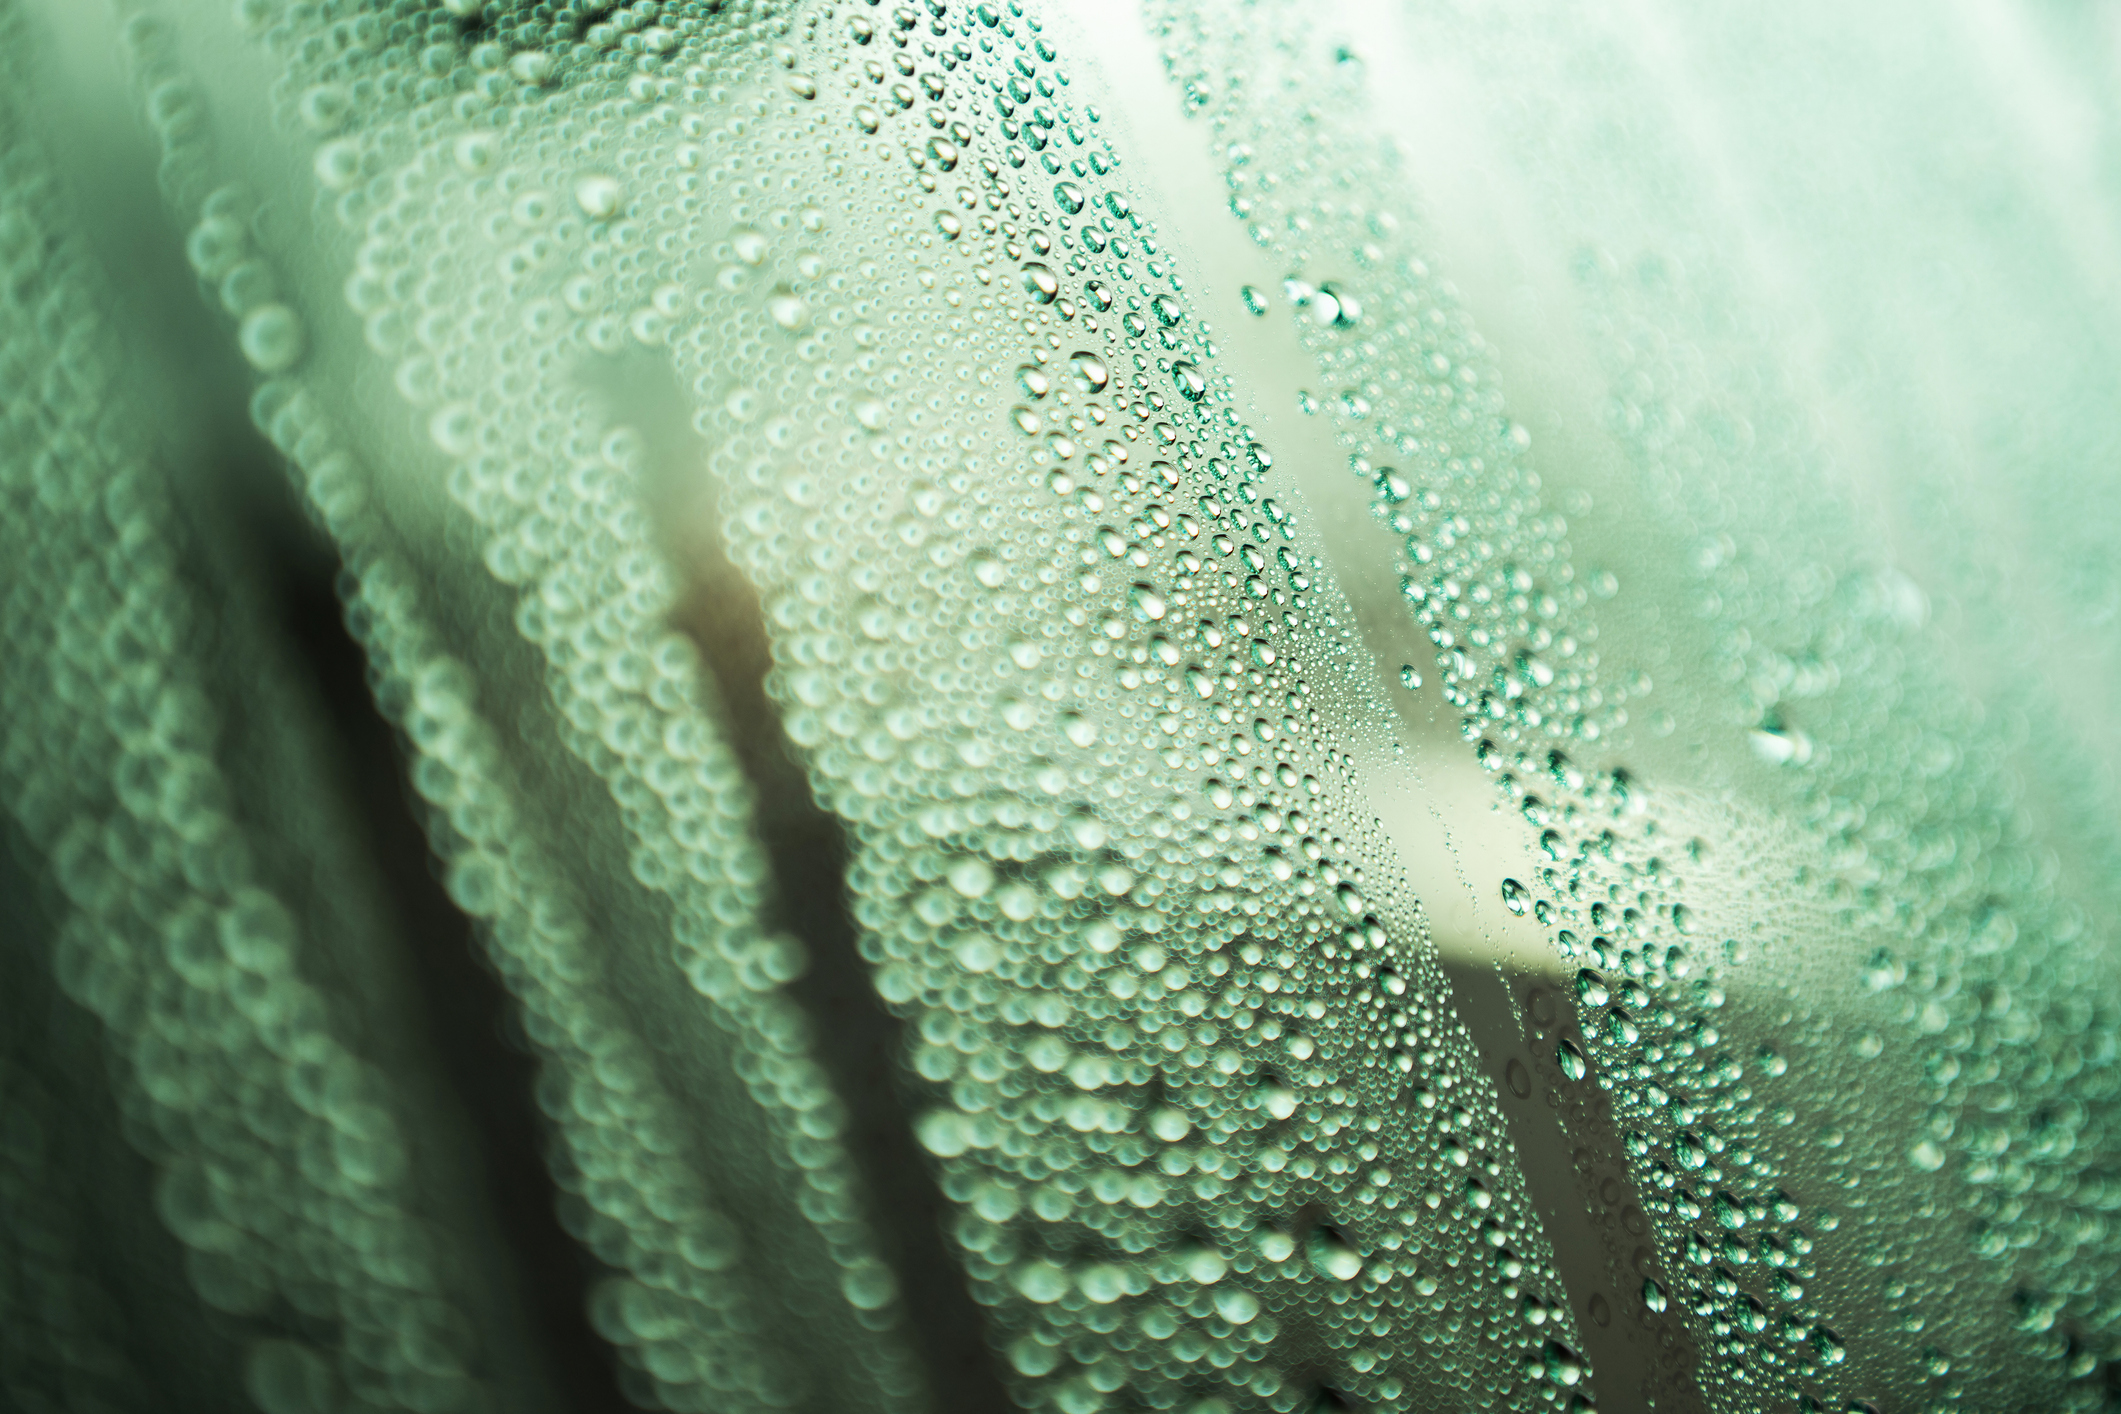 RV window with raindrops gathering.